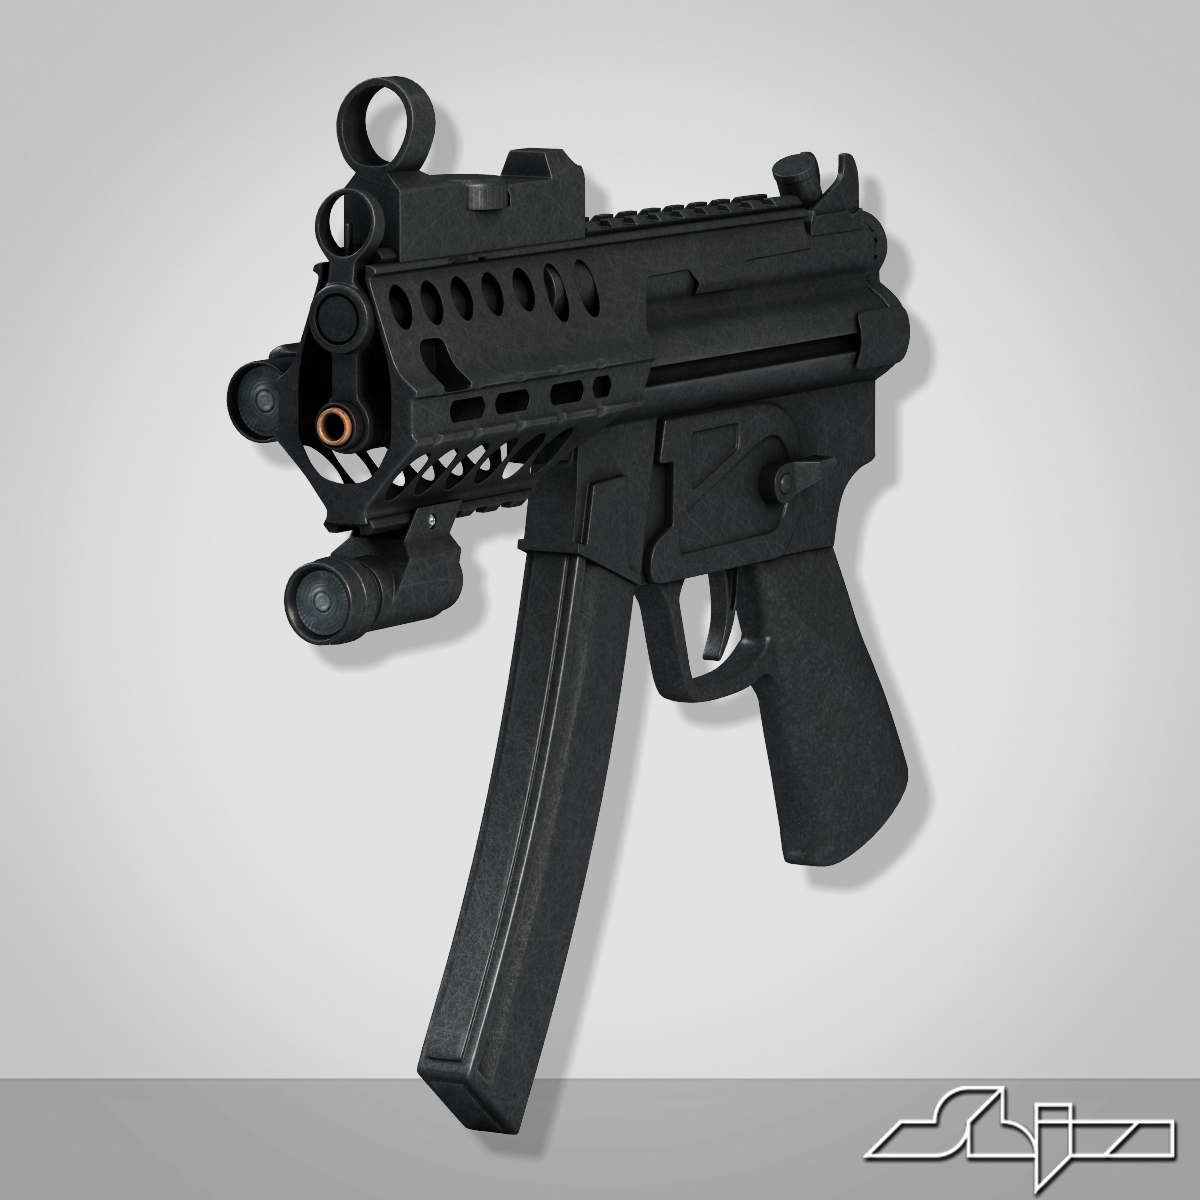 Submachine Gun Mp5 3d Model